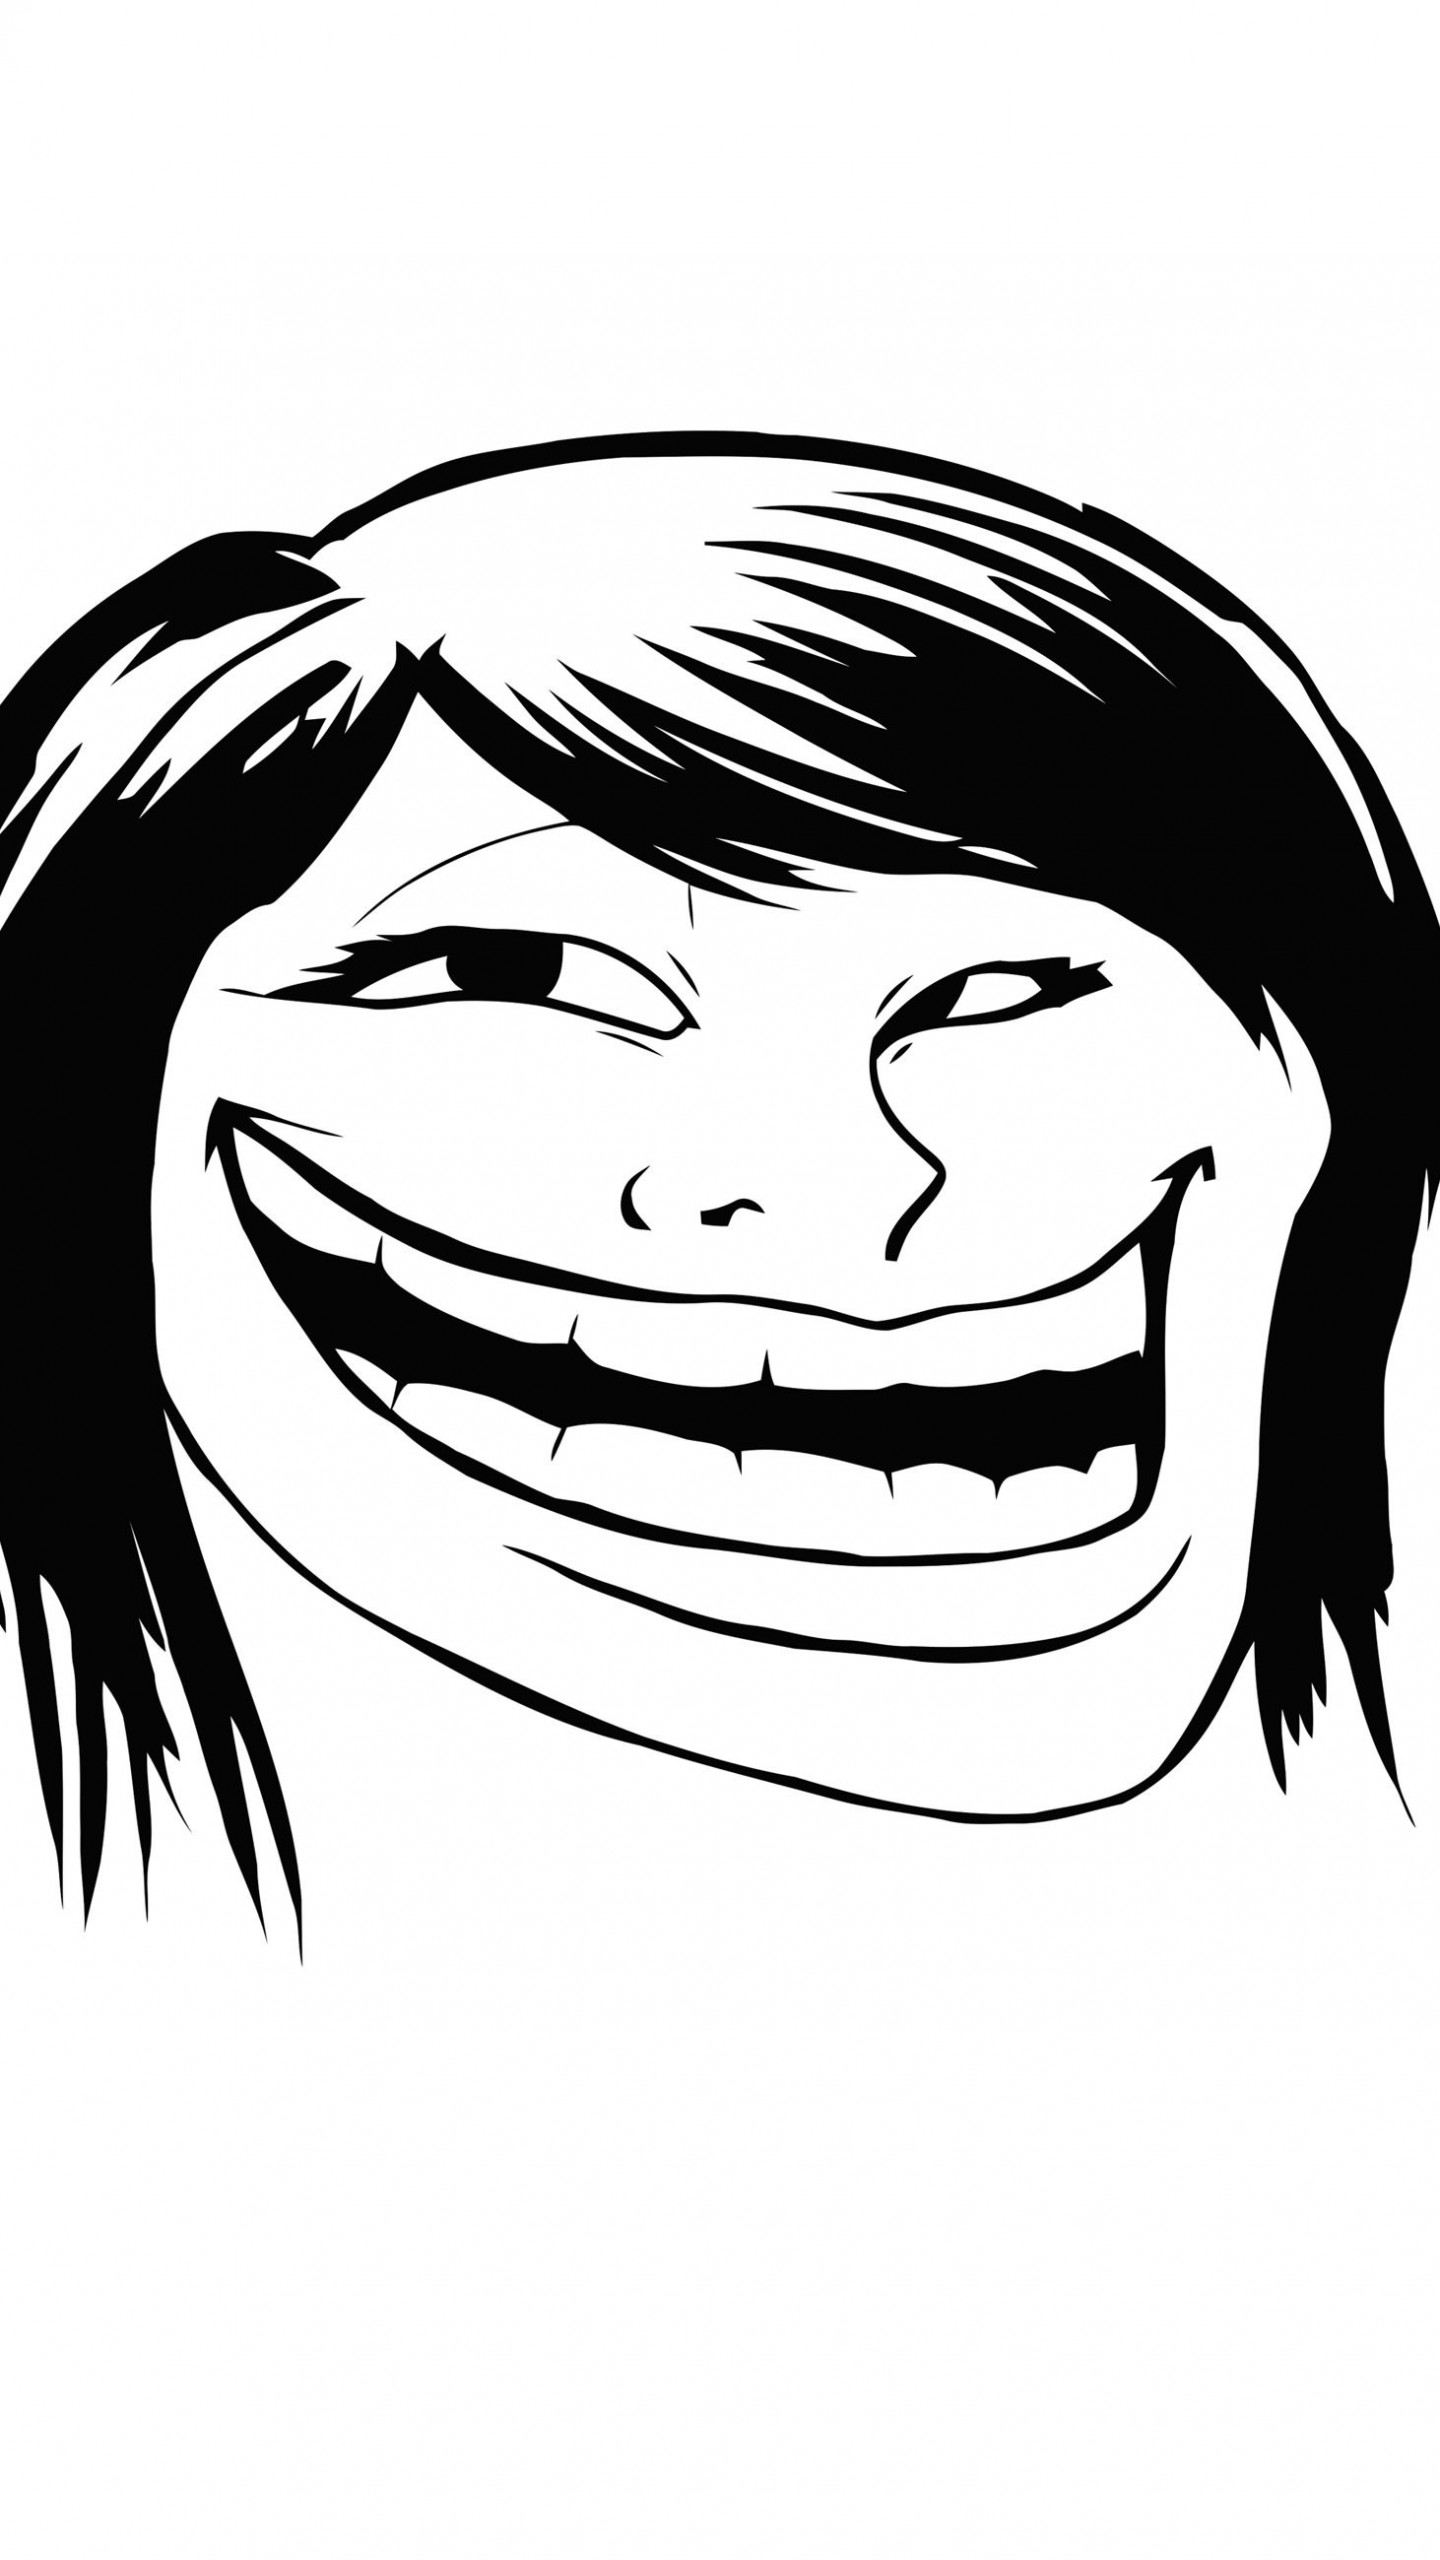 Female Troll Face Meme Wallpaper for SAMSUNG Galaxy S6